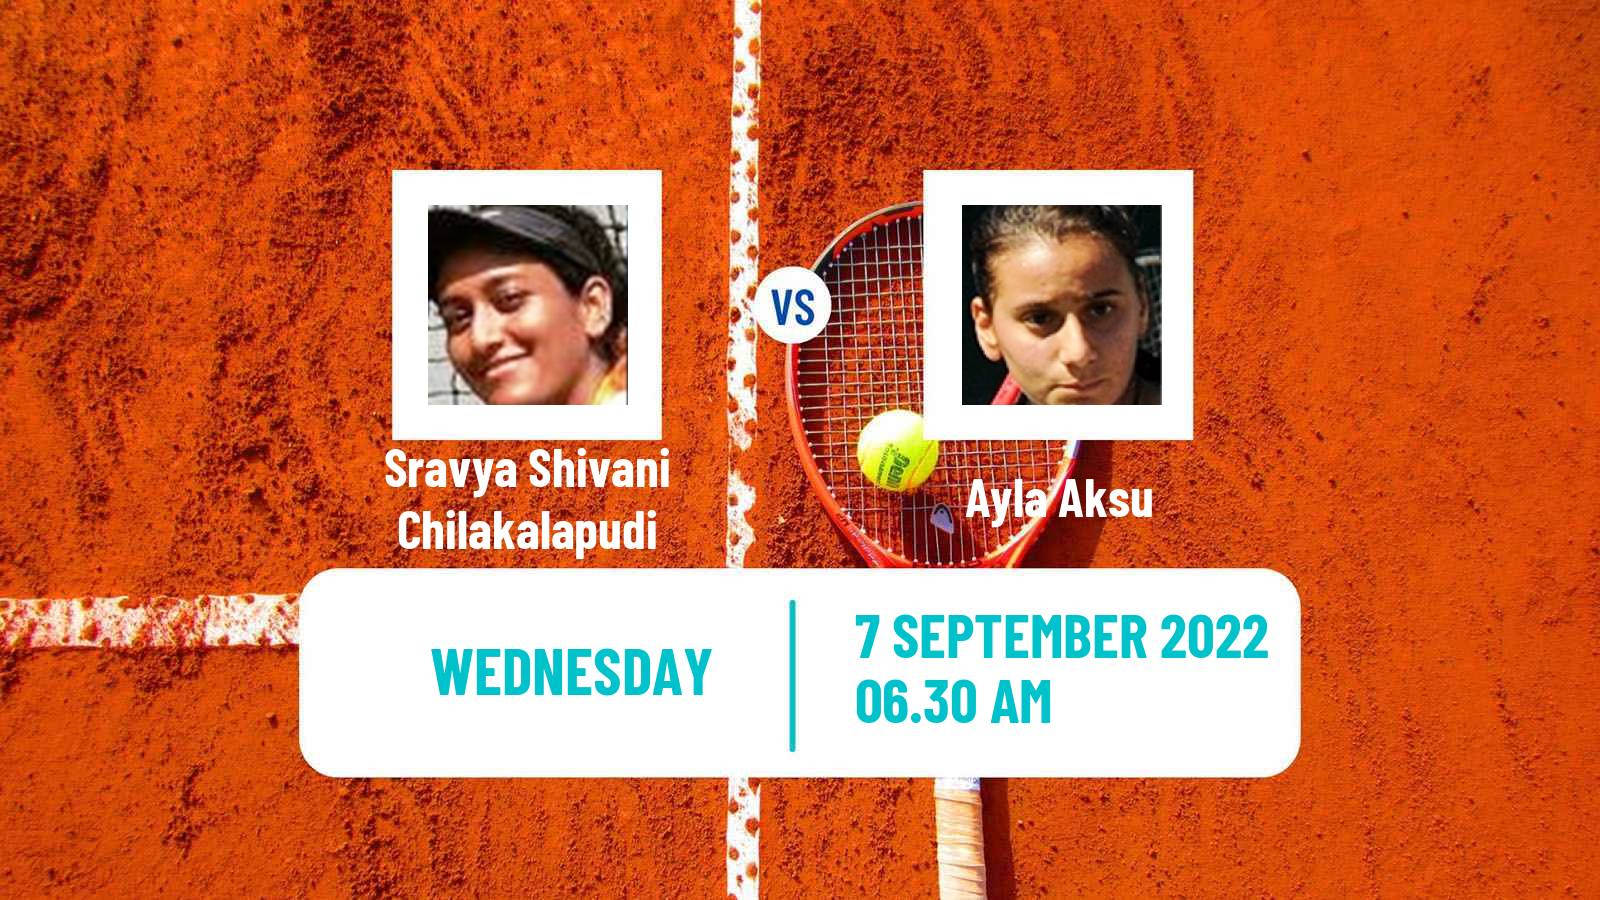 Tennis ITF Tournaments Sravya Shivani Chilakalapudi - Ayla Aksu